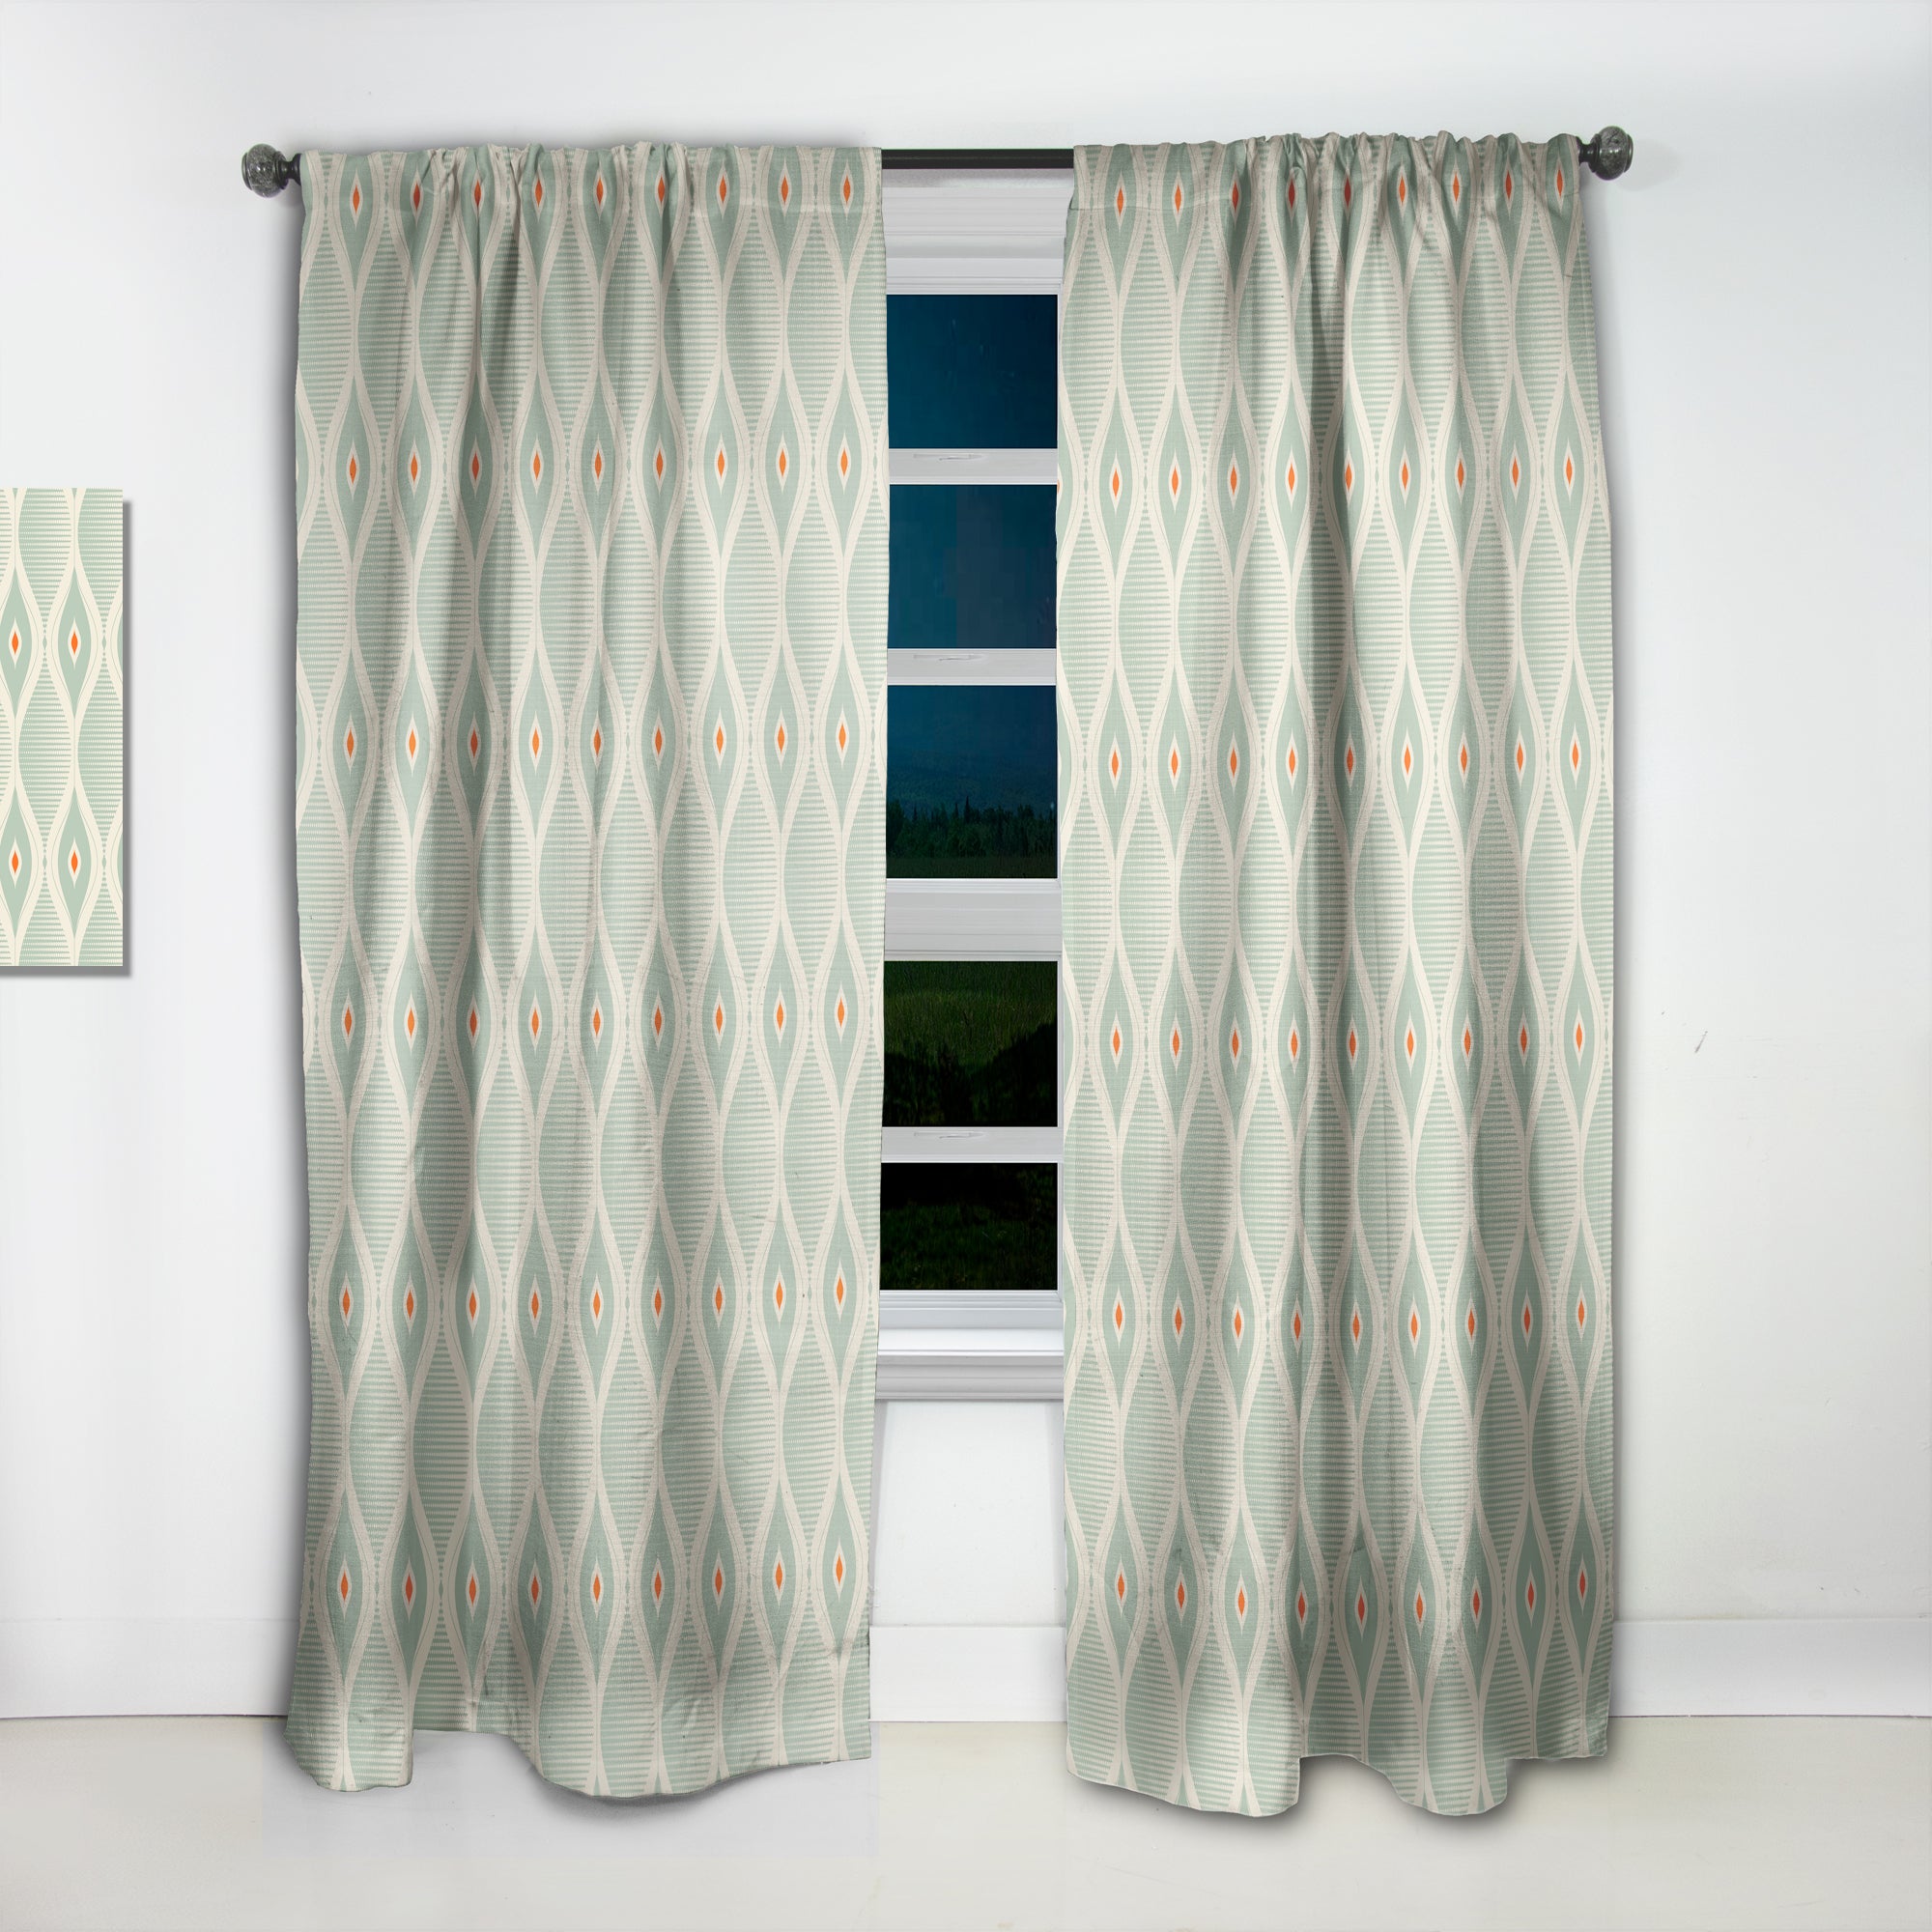 Designart 'Retro Abstract Drops VII' Mid-Century Modern Curtain Panel